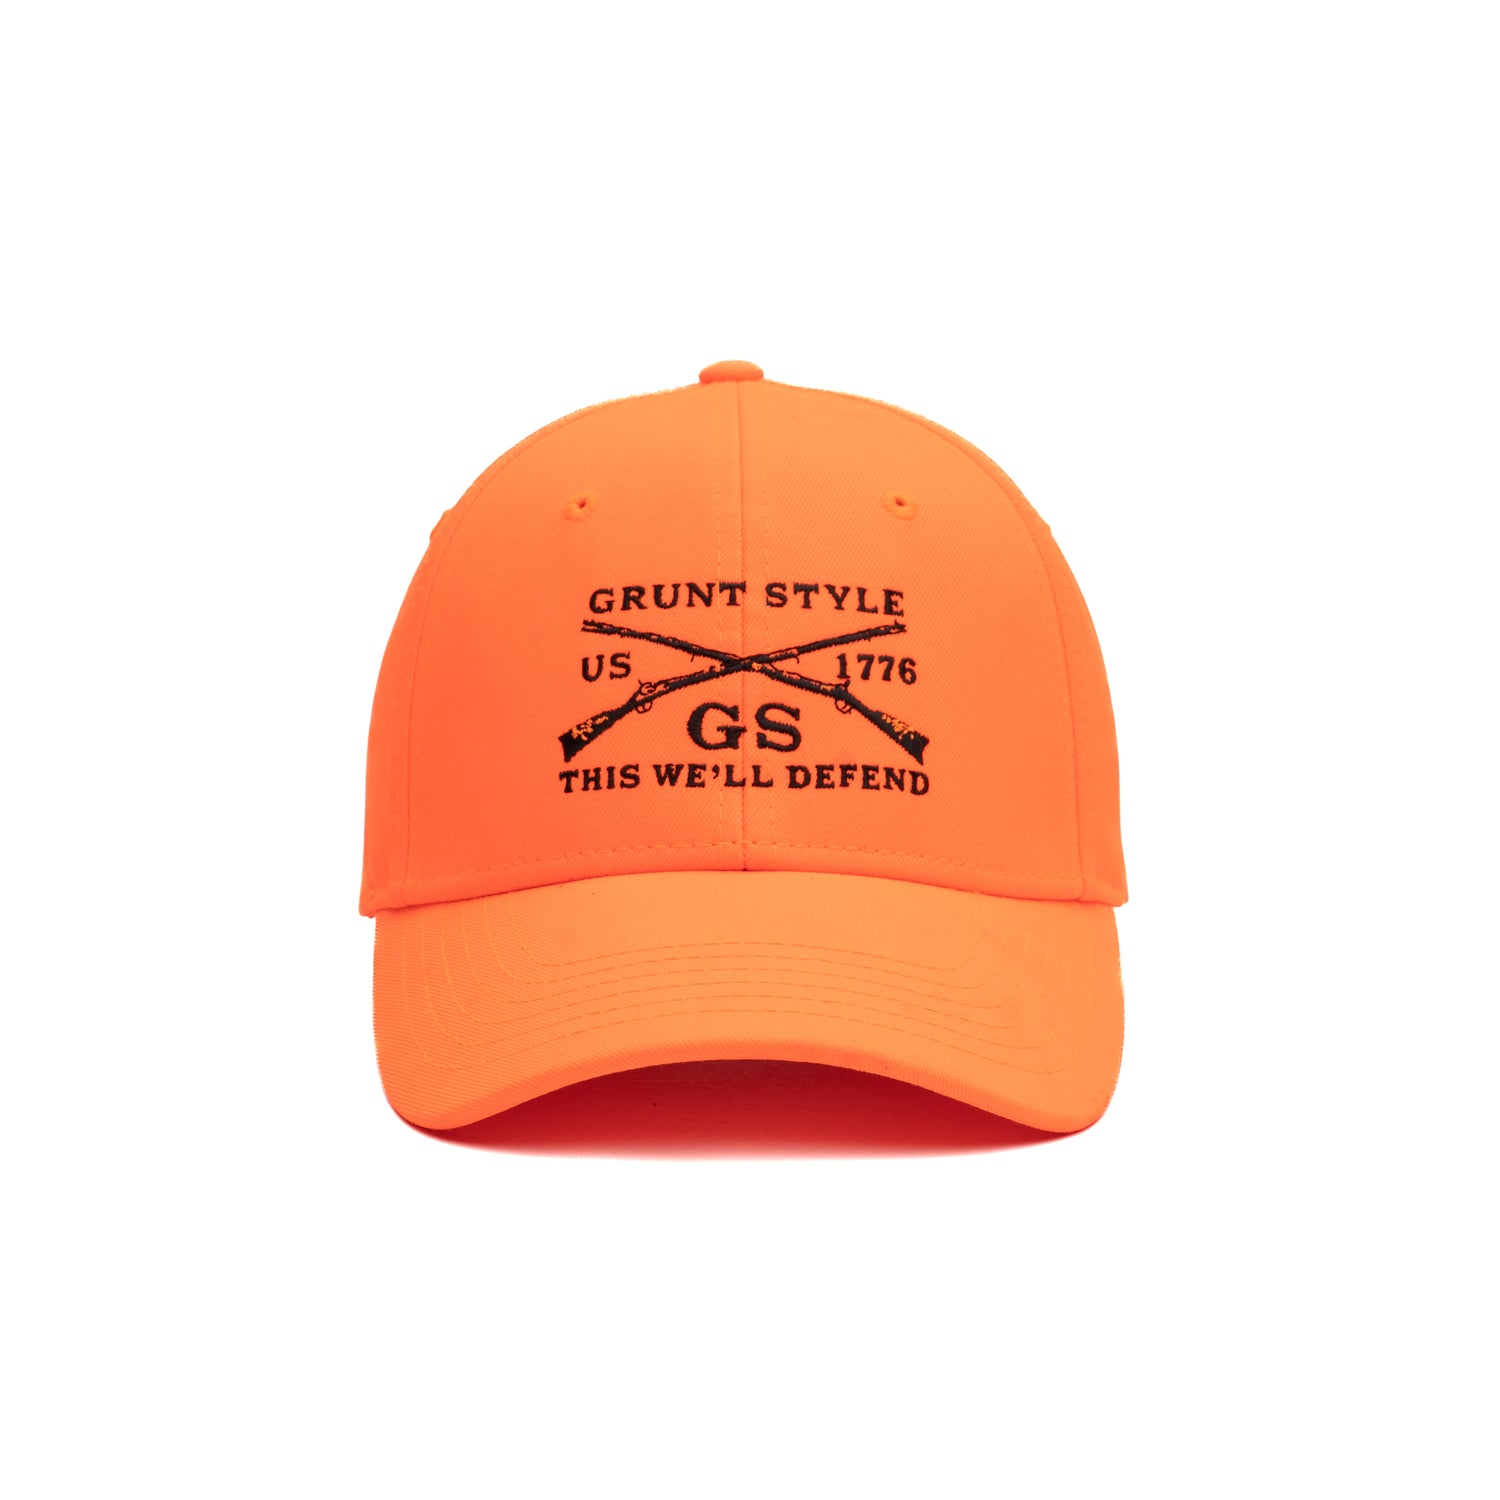 Hunting Clothes - Hat Bundle Deal 